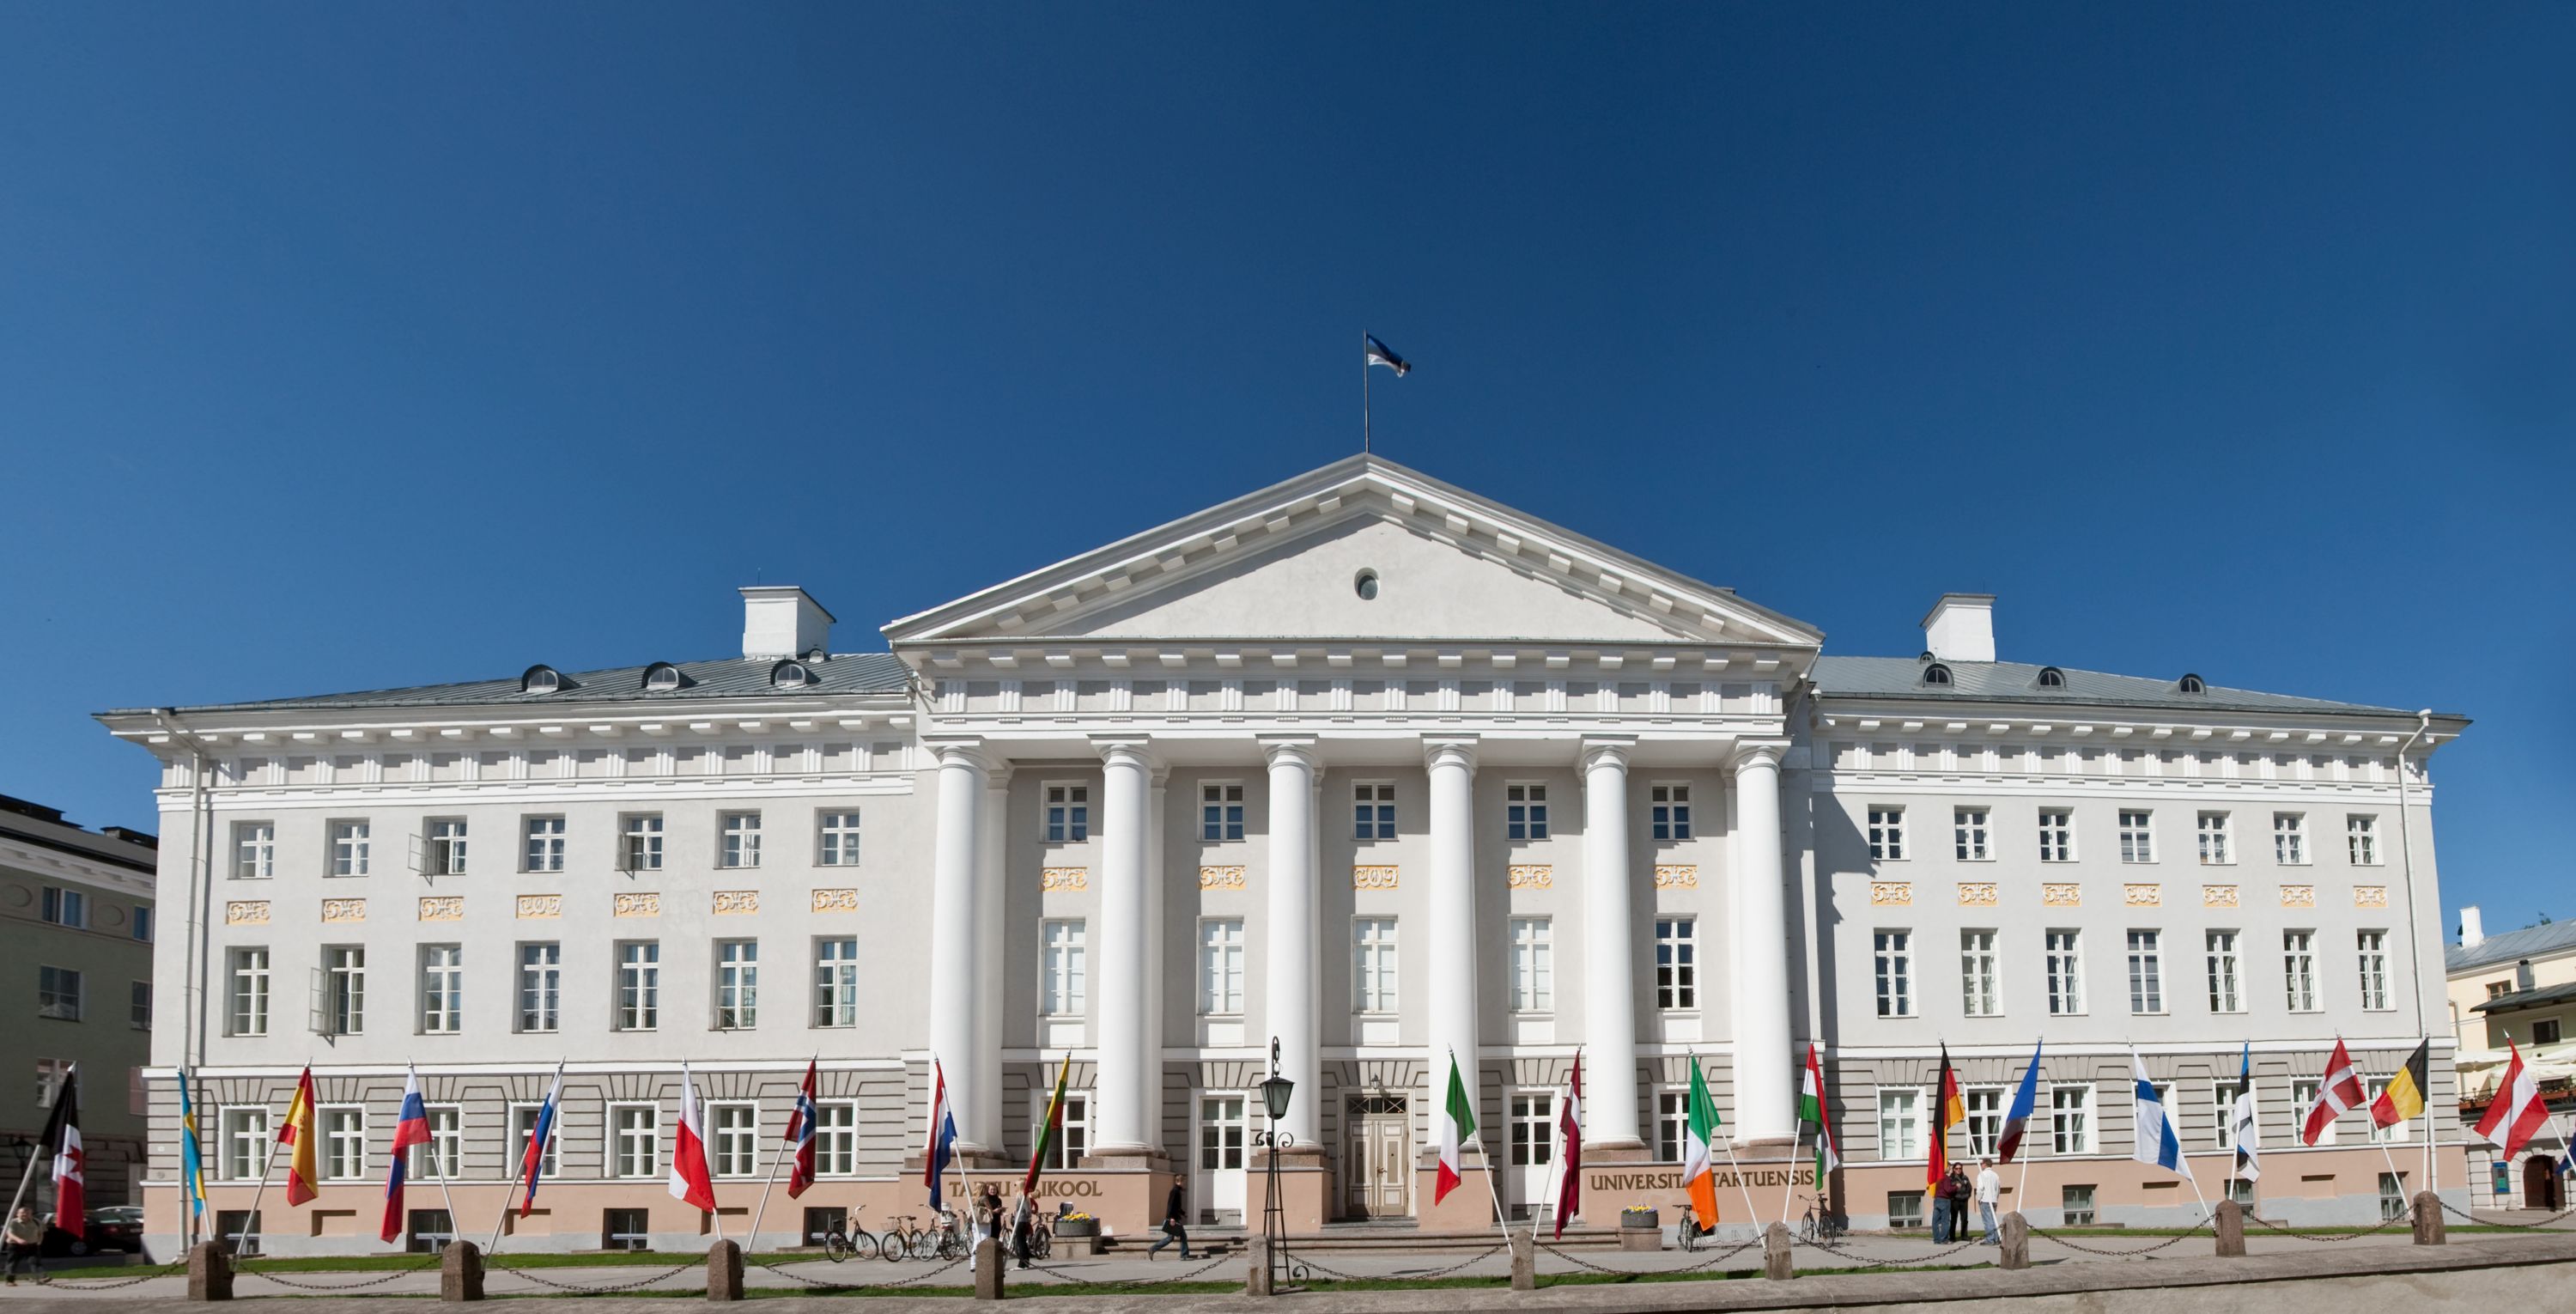 The main building of University of Tartu